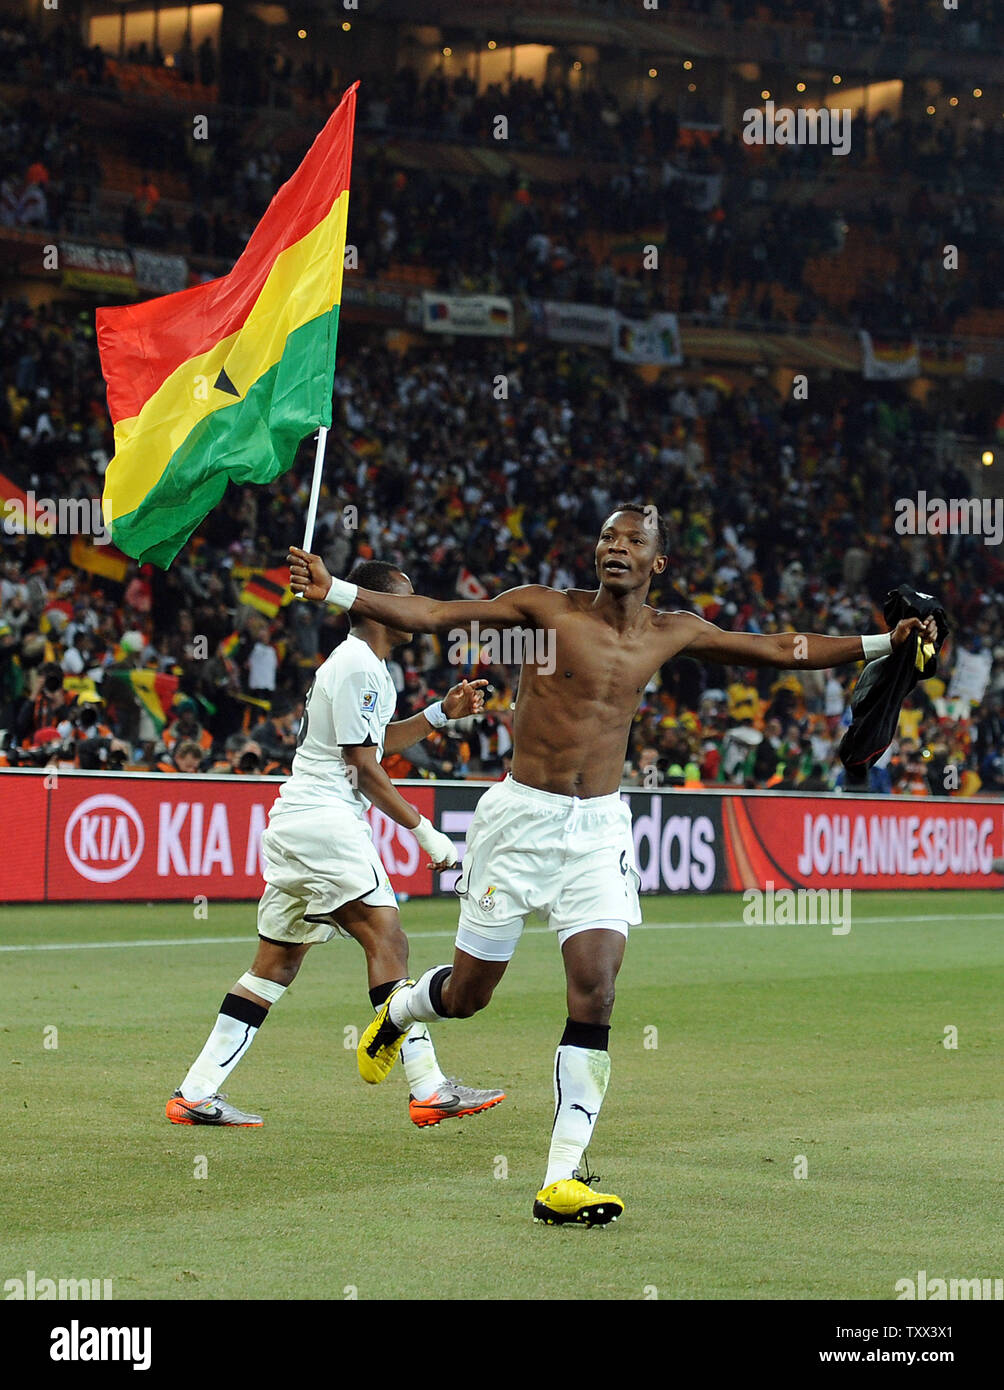 John Pantsil of Ghana celebrates qualification after the Group D match at Soccer City Stadium in Johannesburg, South Africa on June 23, 2010. UPI/Chris Brunskill Stock Photo